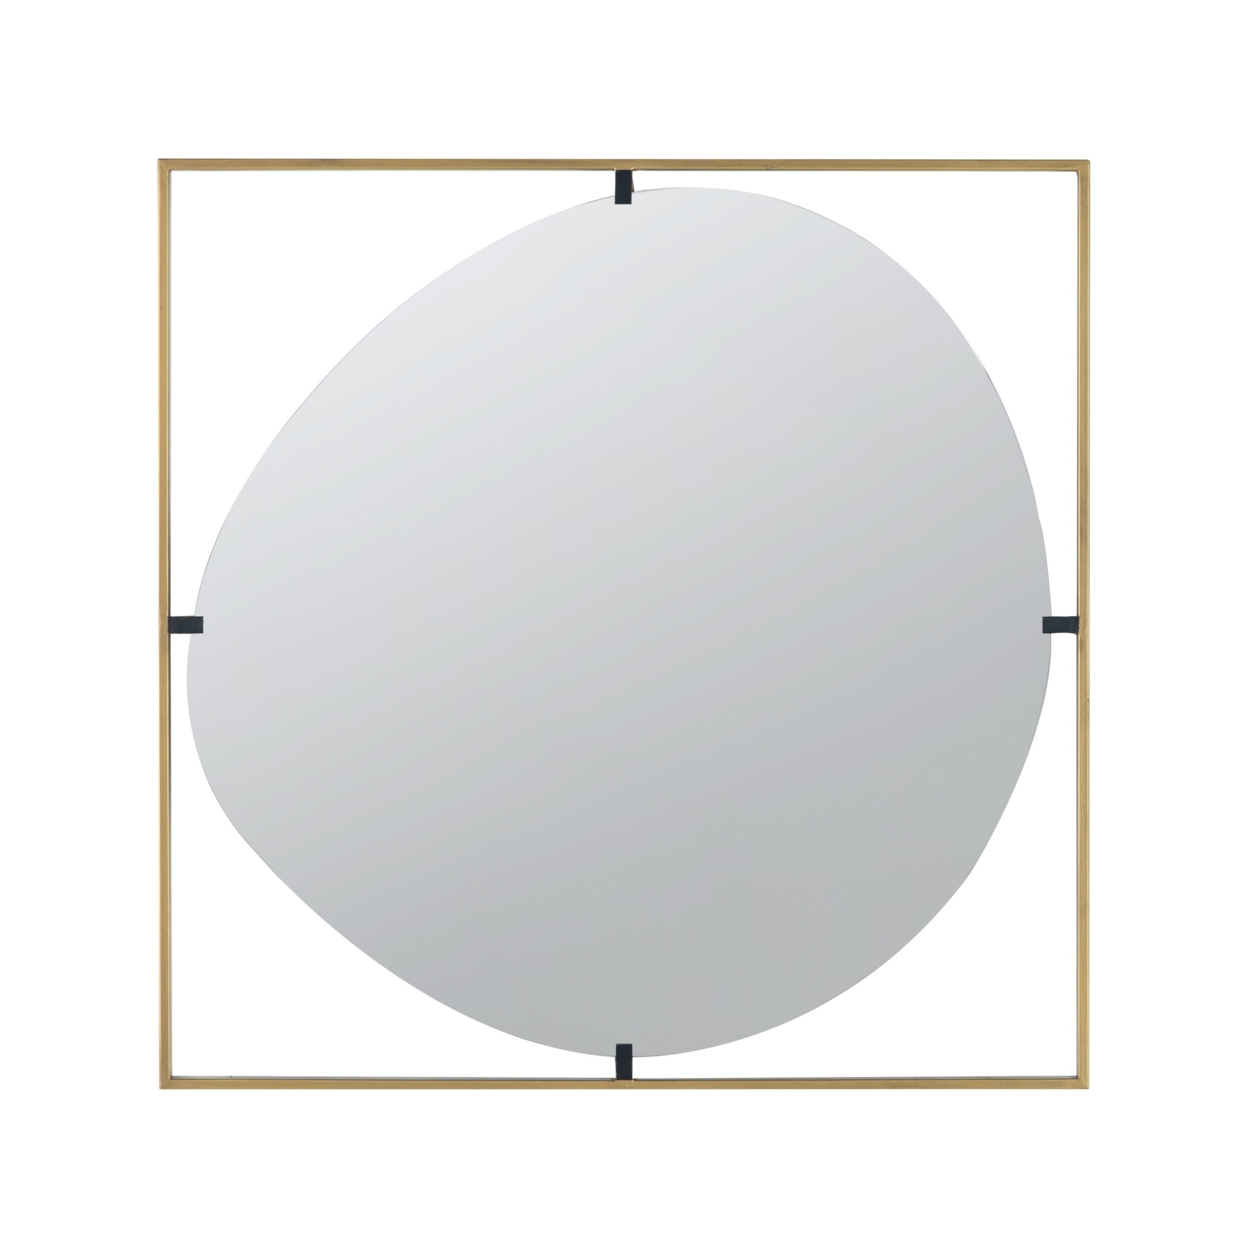 Ani 32 Inch Mirror, Artistic Oval Cut Out Design, Gold Finish Metal Frame- Saltoro Sherpi